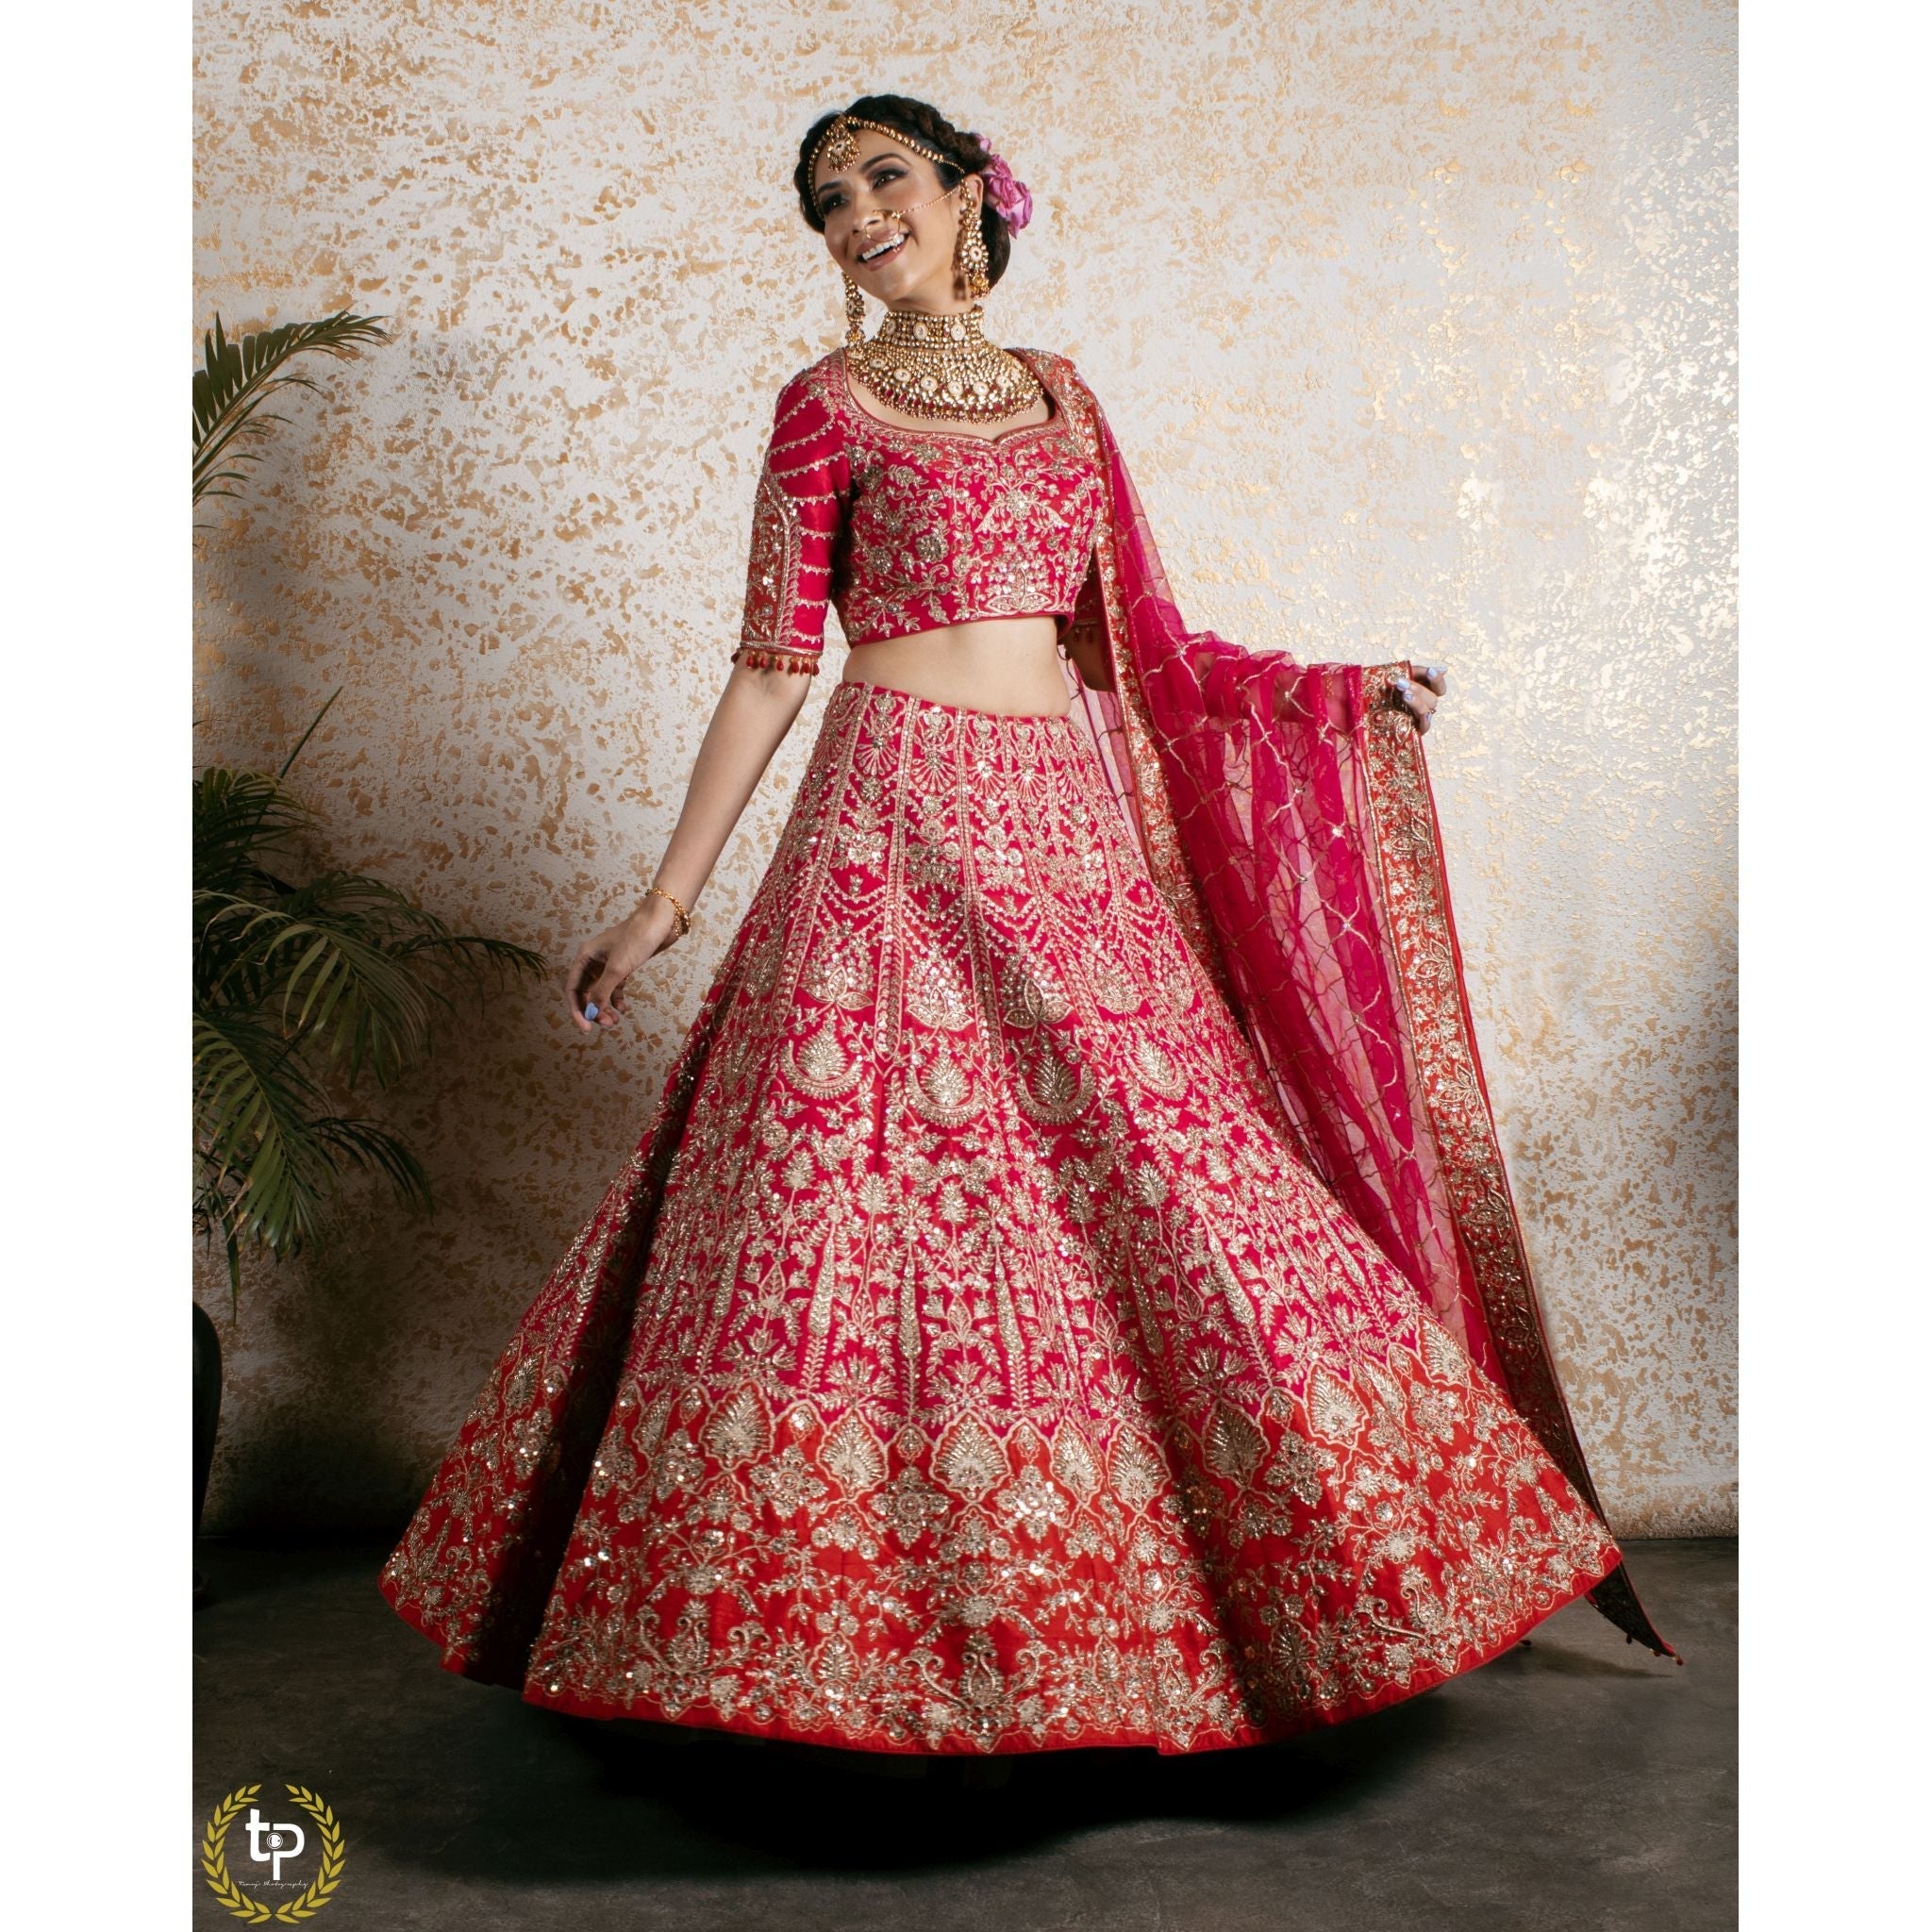 Cerise Pink And Red Lehenga Set - Indian Designer Bridal Wedding Outfit